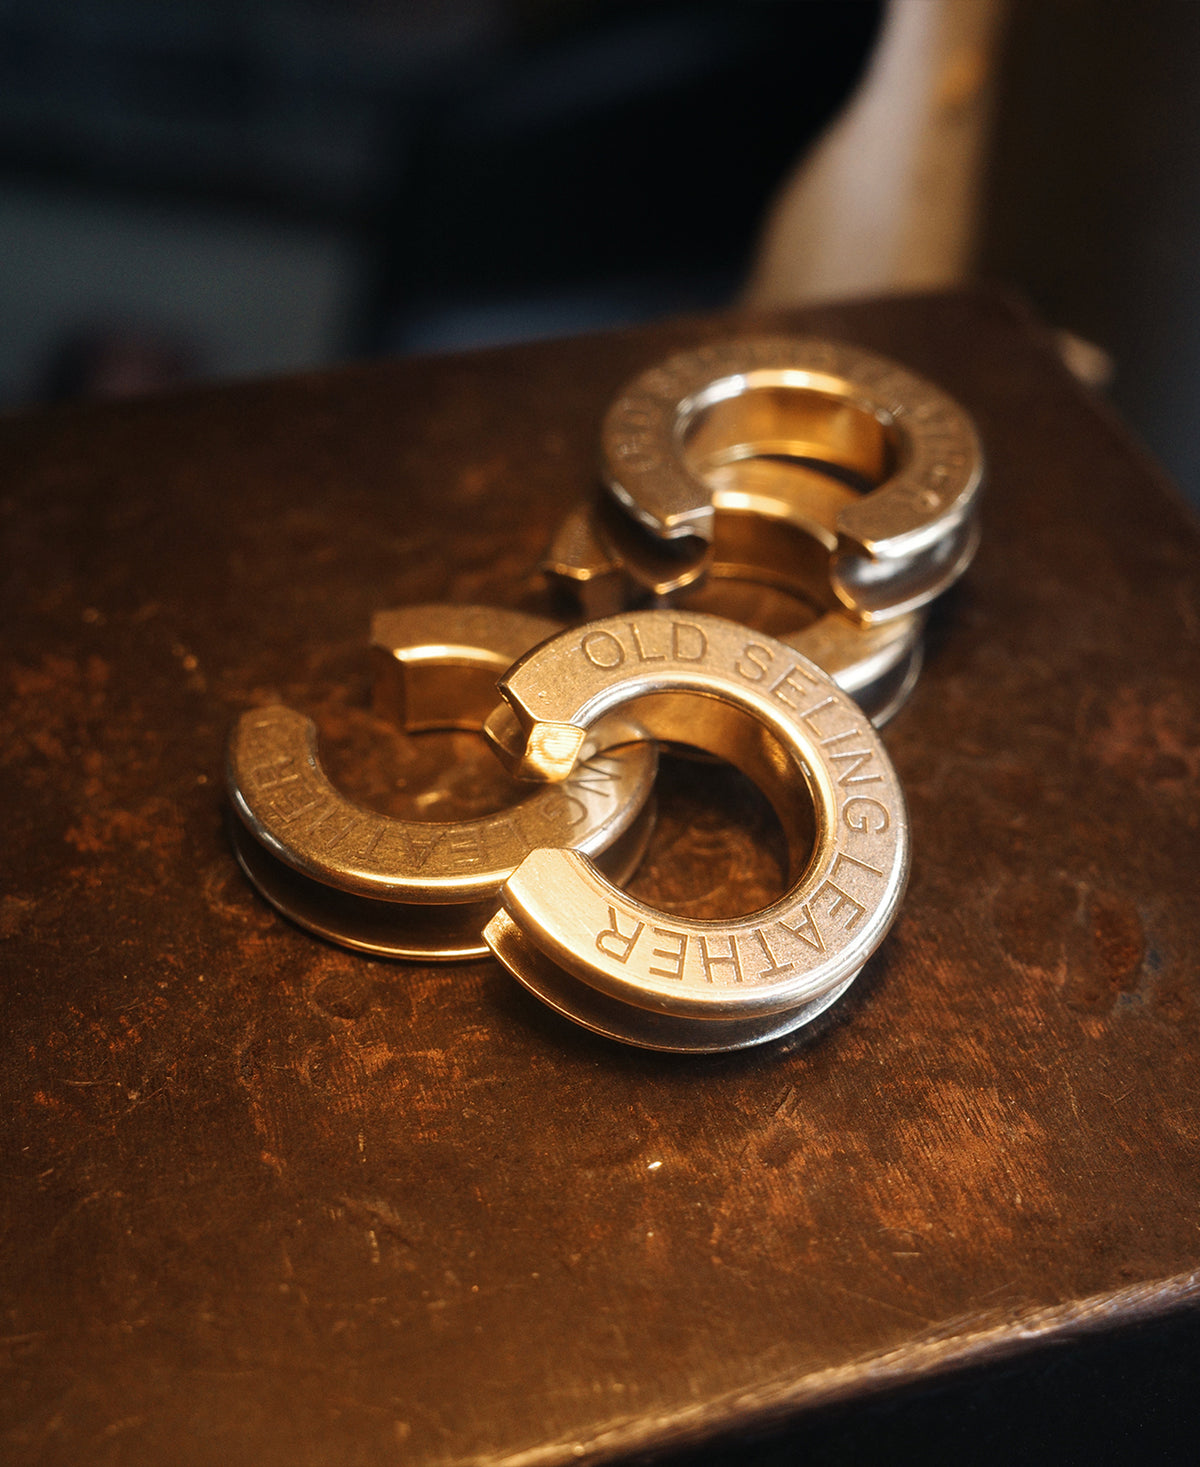 Vintage Style Brass Horseshoe Key Chain